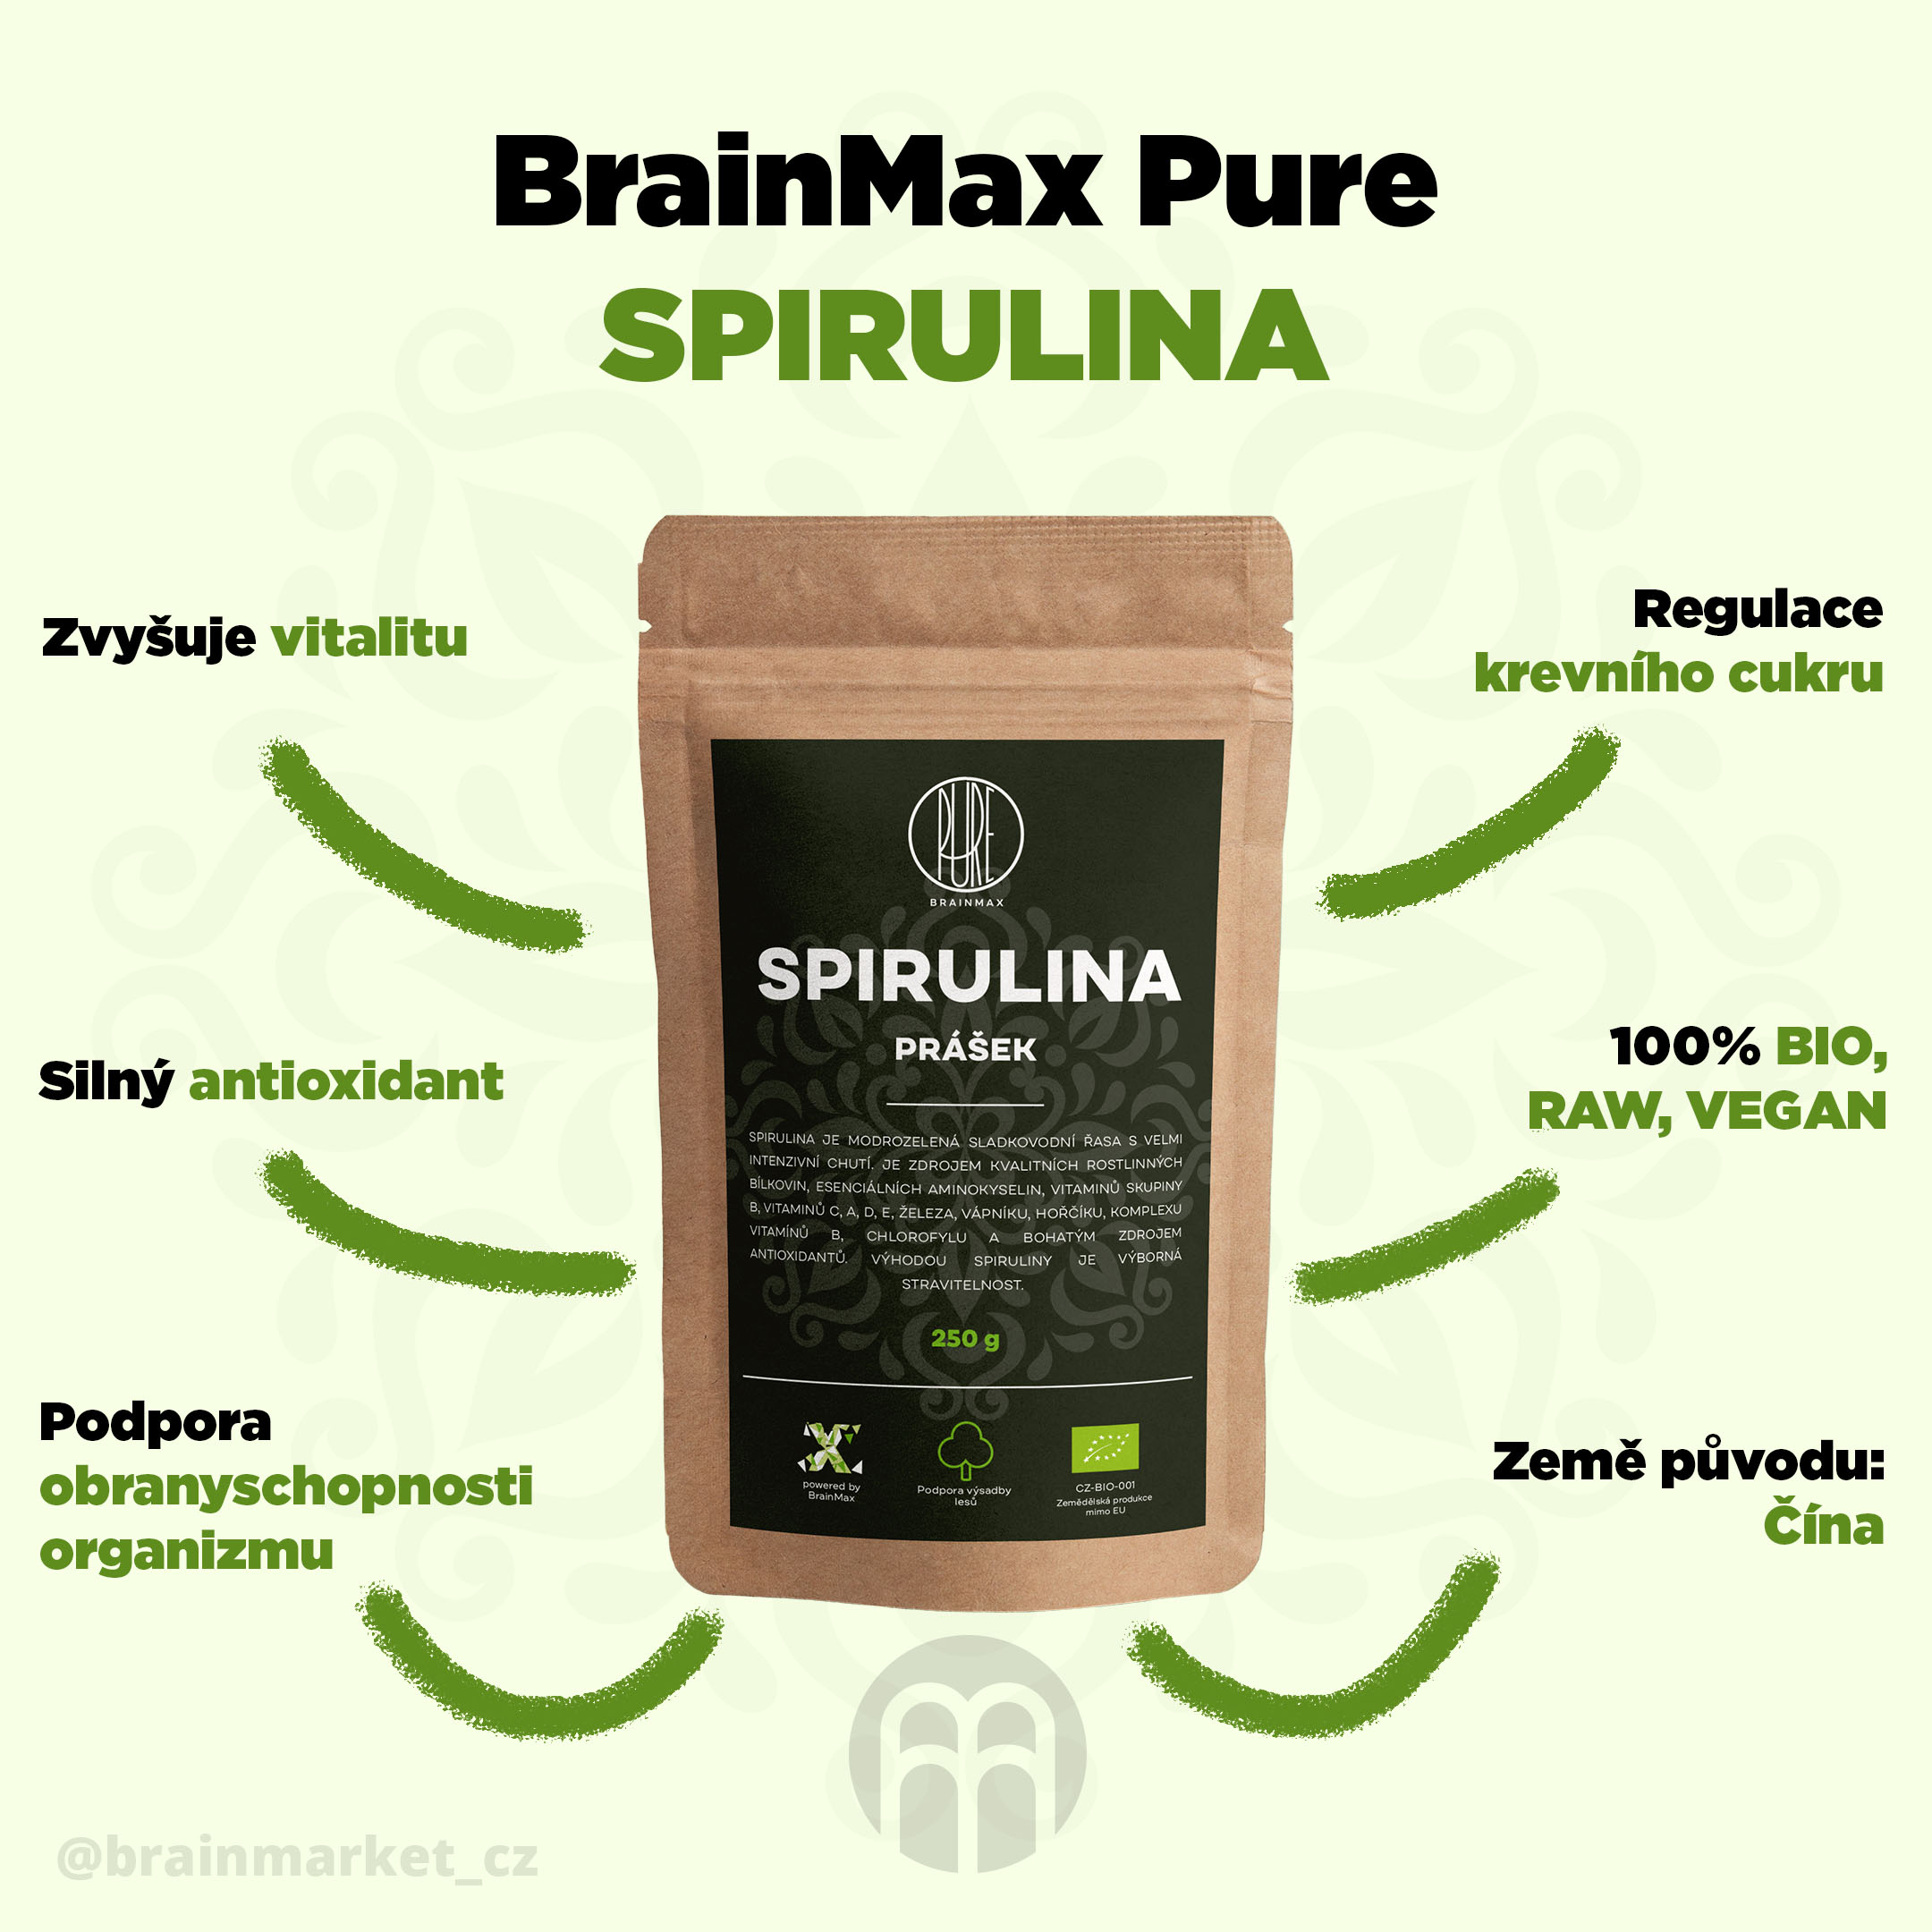 BrainMax Pure Spirulina BIO prášek, 250 g - BrainMarket.cz